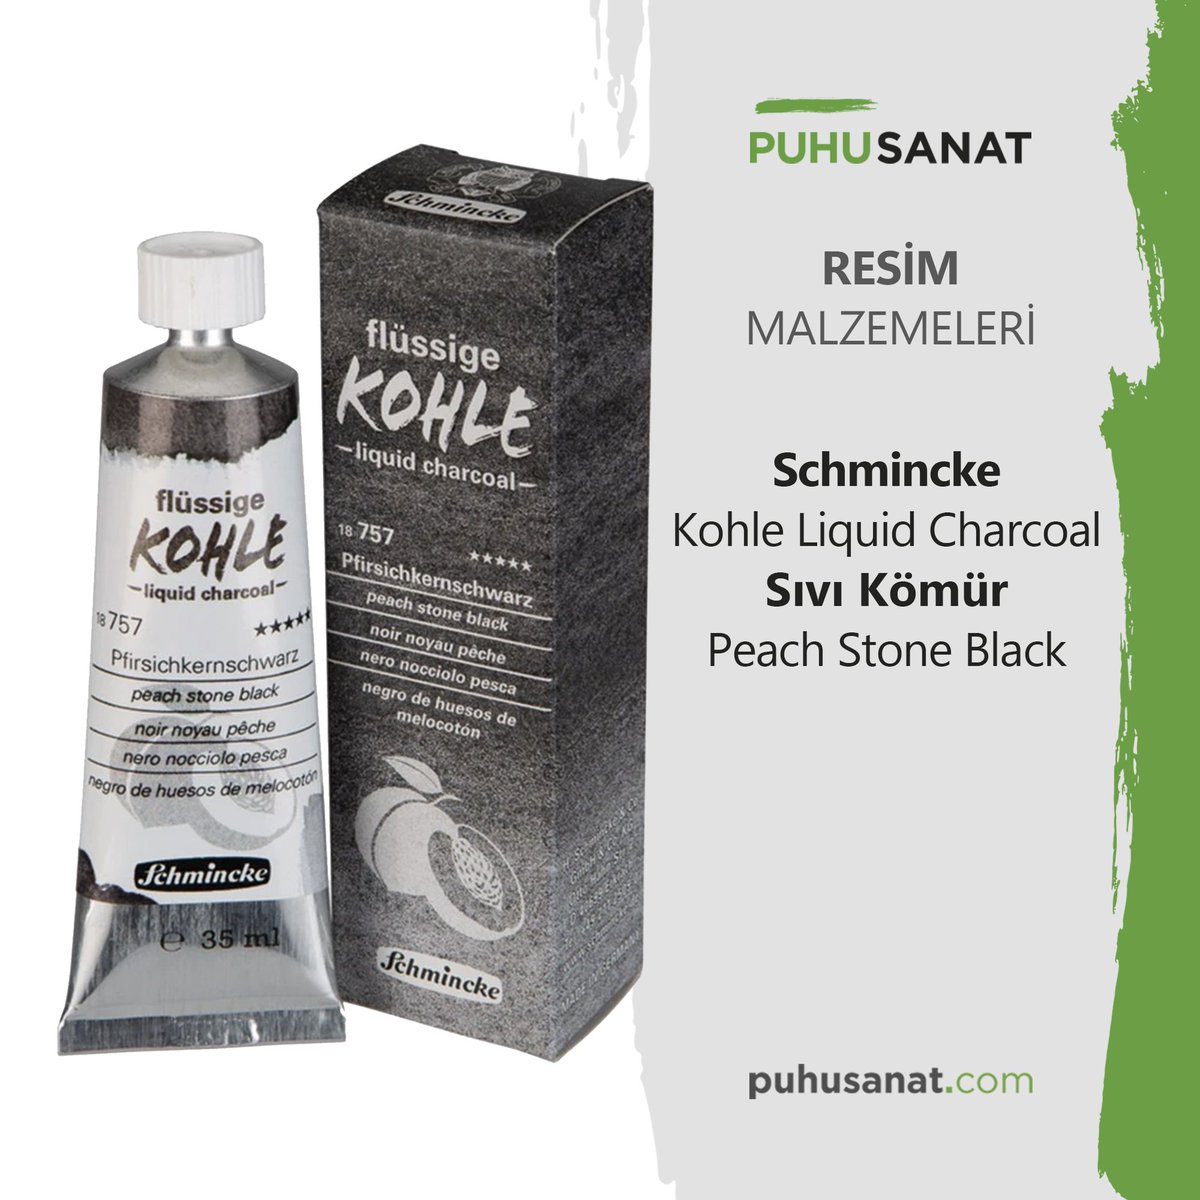 Schmincke Kohle Liquid Charcoal Sıvı Kömür Peach Stone Black

puhusanat.com/schmincke-kohl…

#schmincke #sıvıkömür #çizimmalzemesi #LiquidCharcoal  #resimmalzemeleri #likidboya